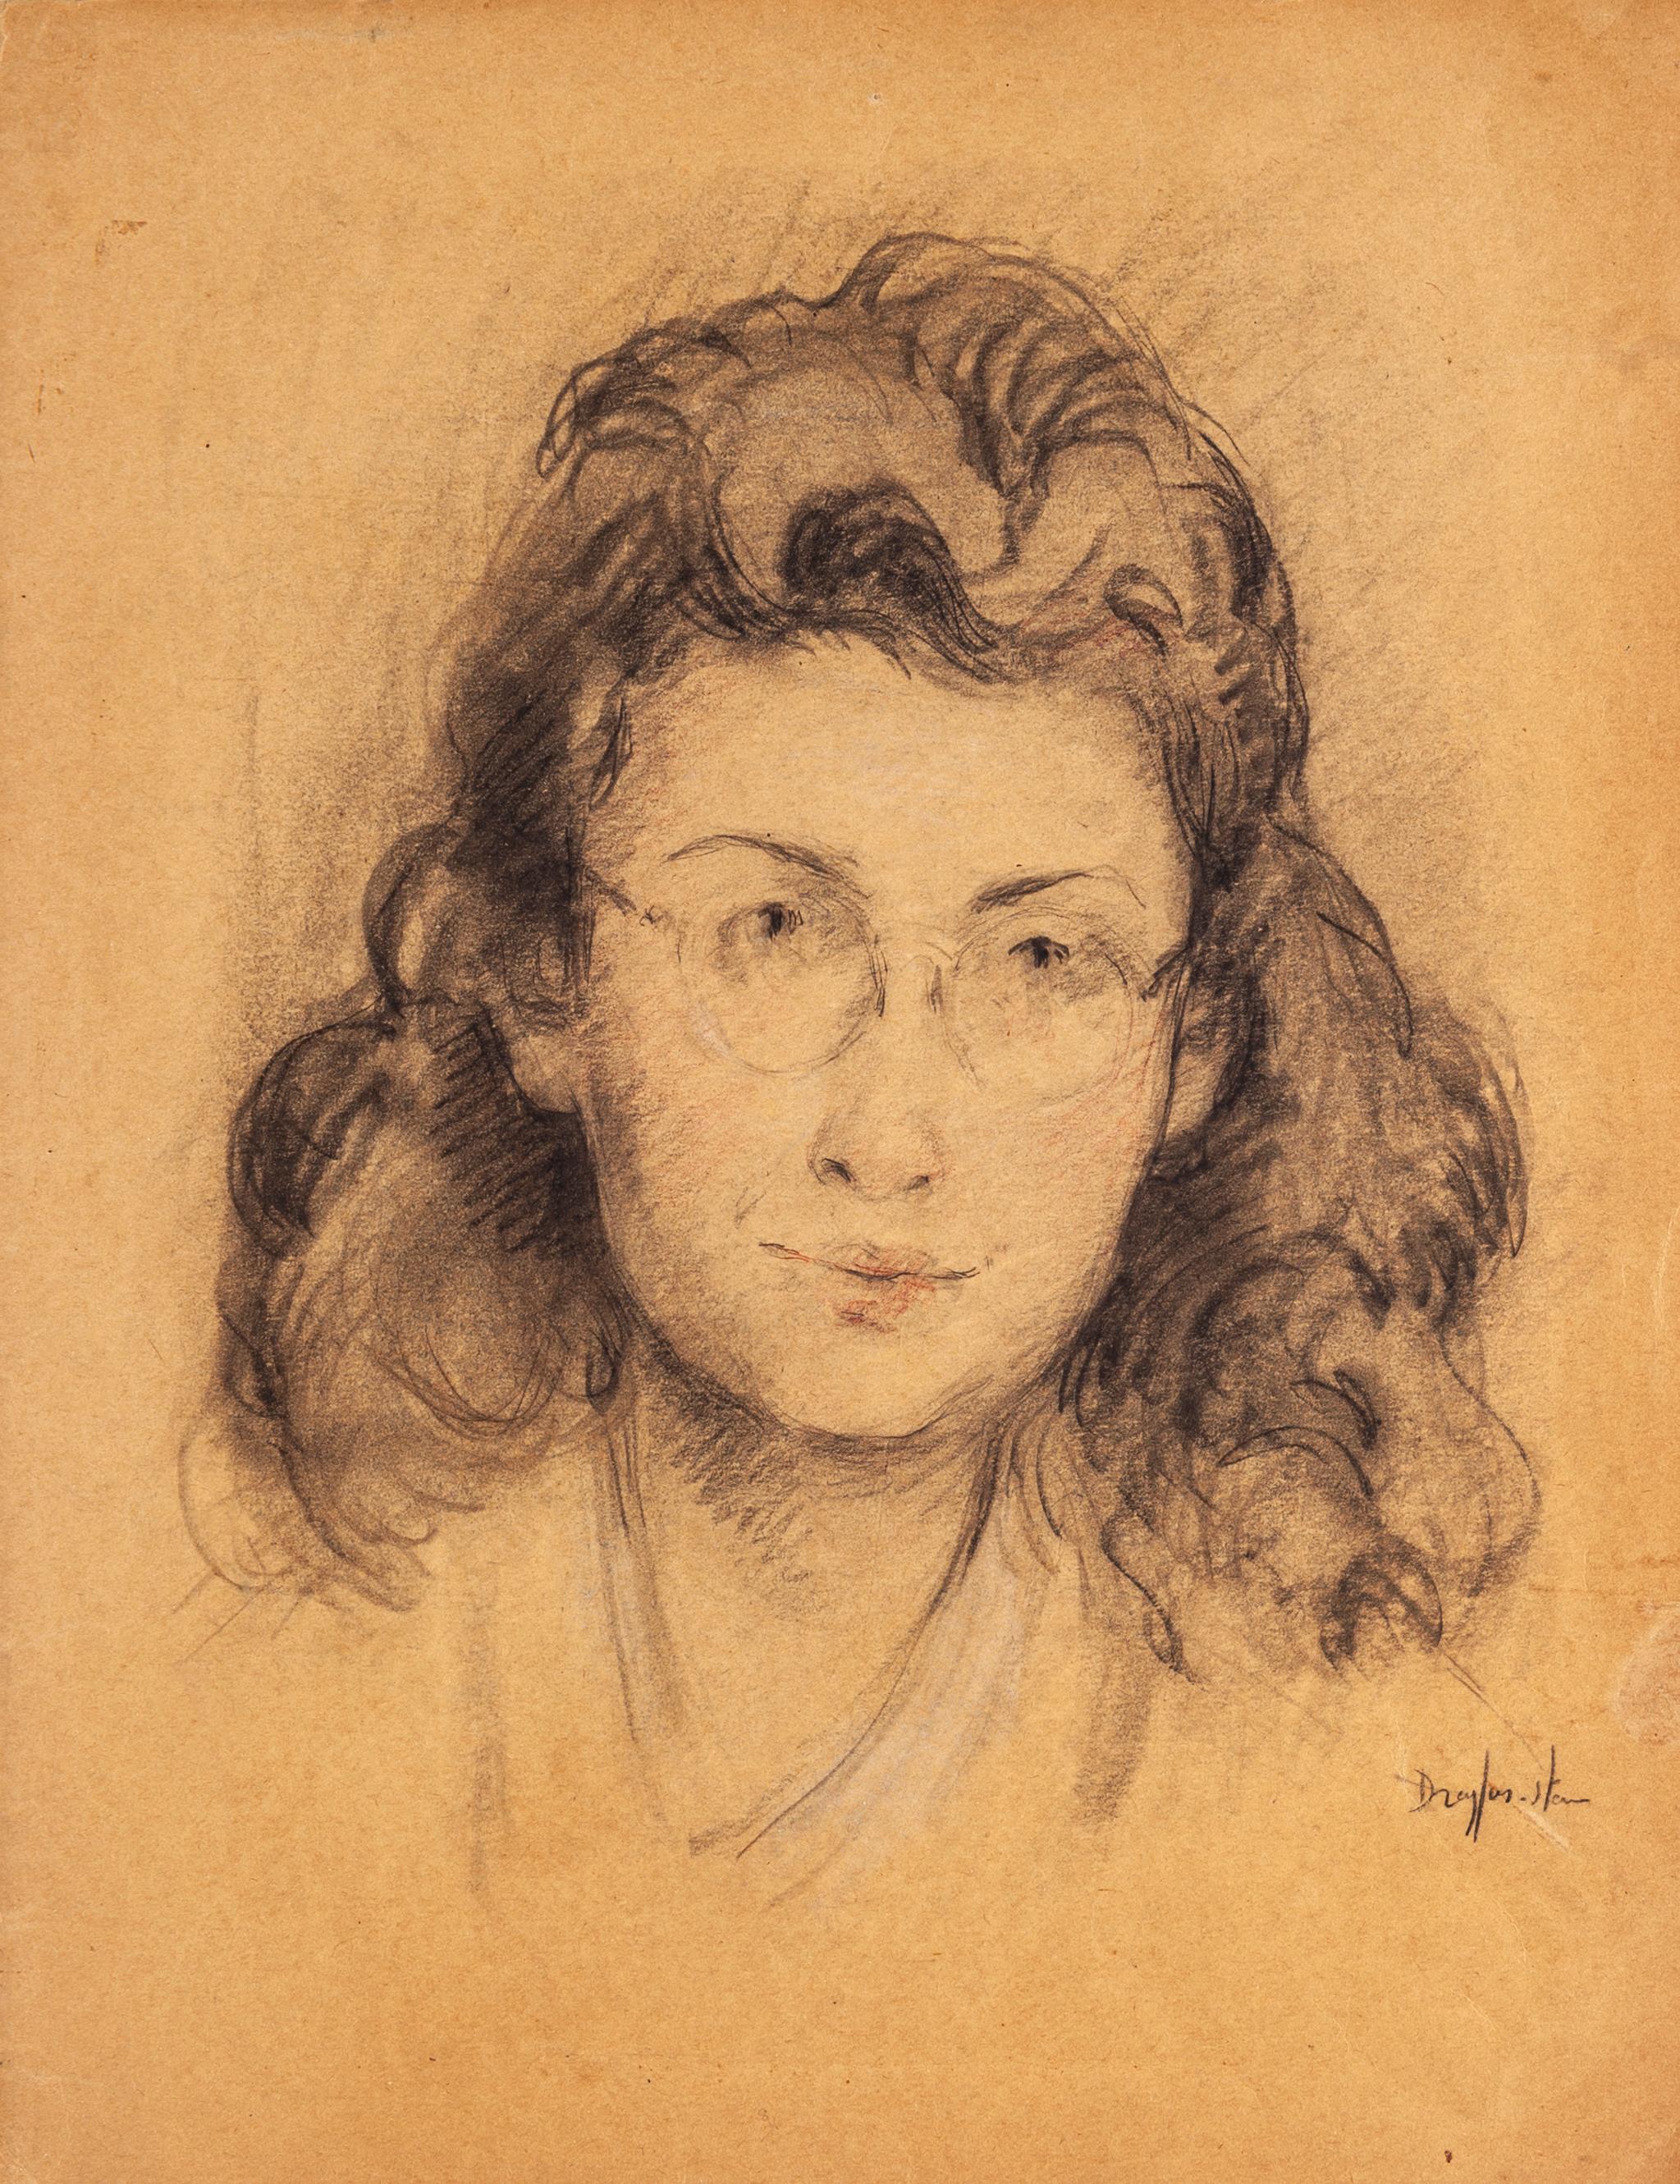 Female Portrait - Pencil and Charcoal on Paper by J. Dreyfus-Stern - 1940s - Art by Jean Dreyfus-Stern